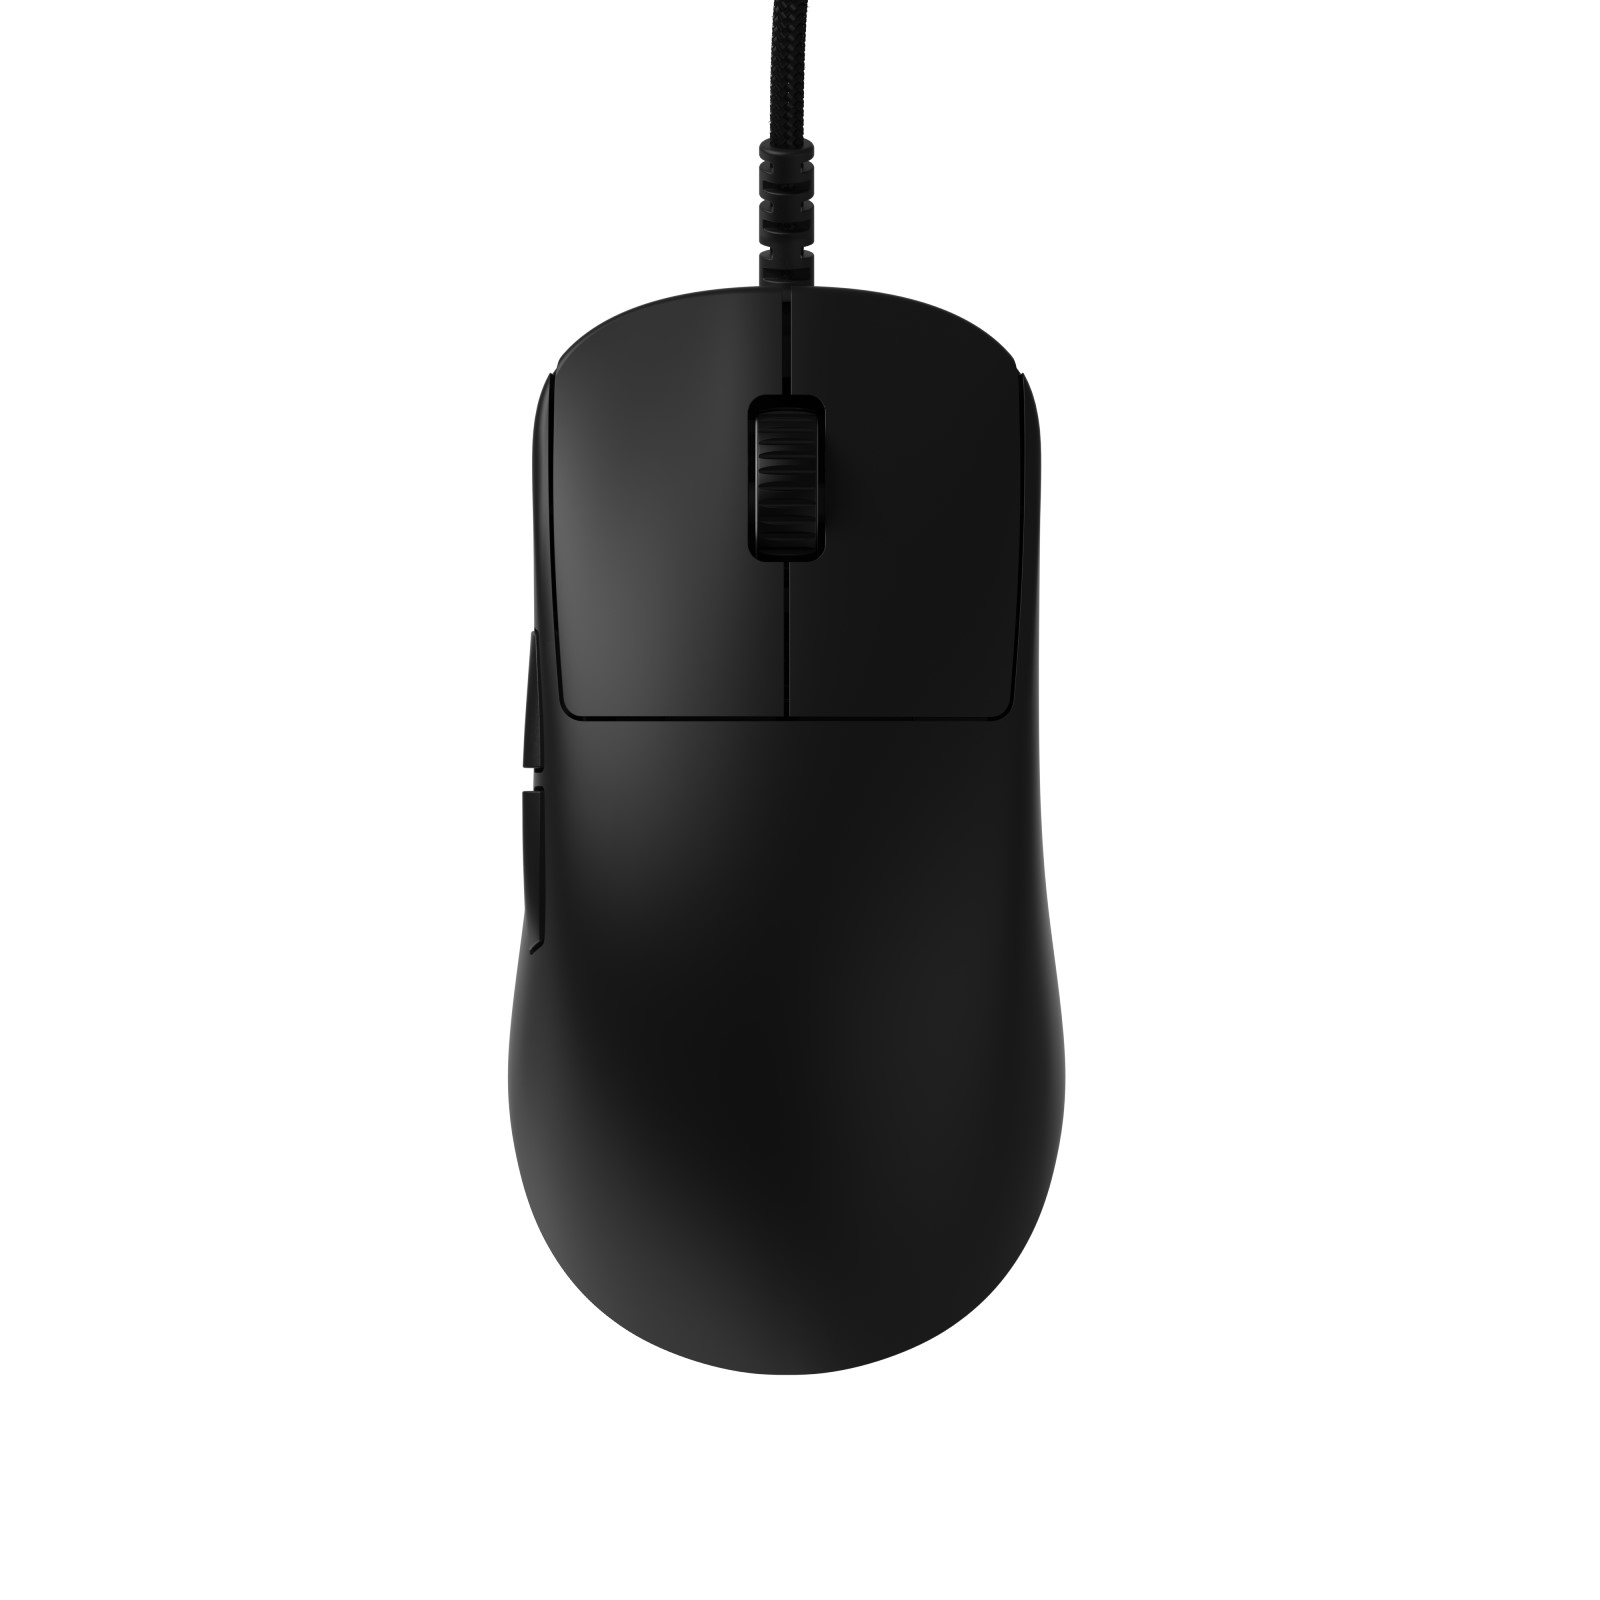 Endgame Gear OP1 Gaming Mouse Black